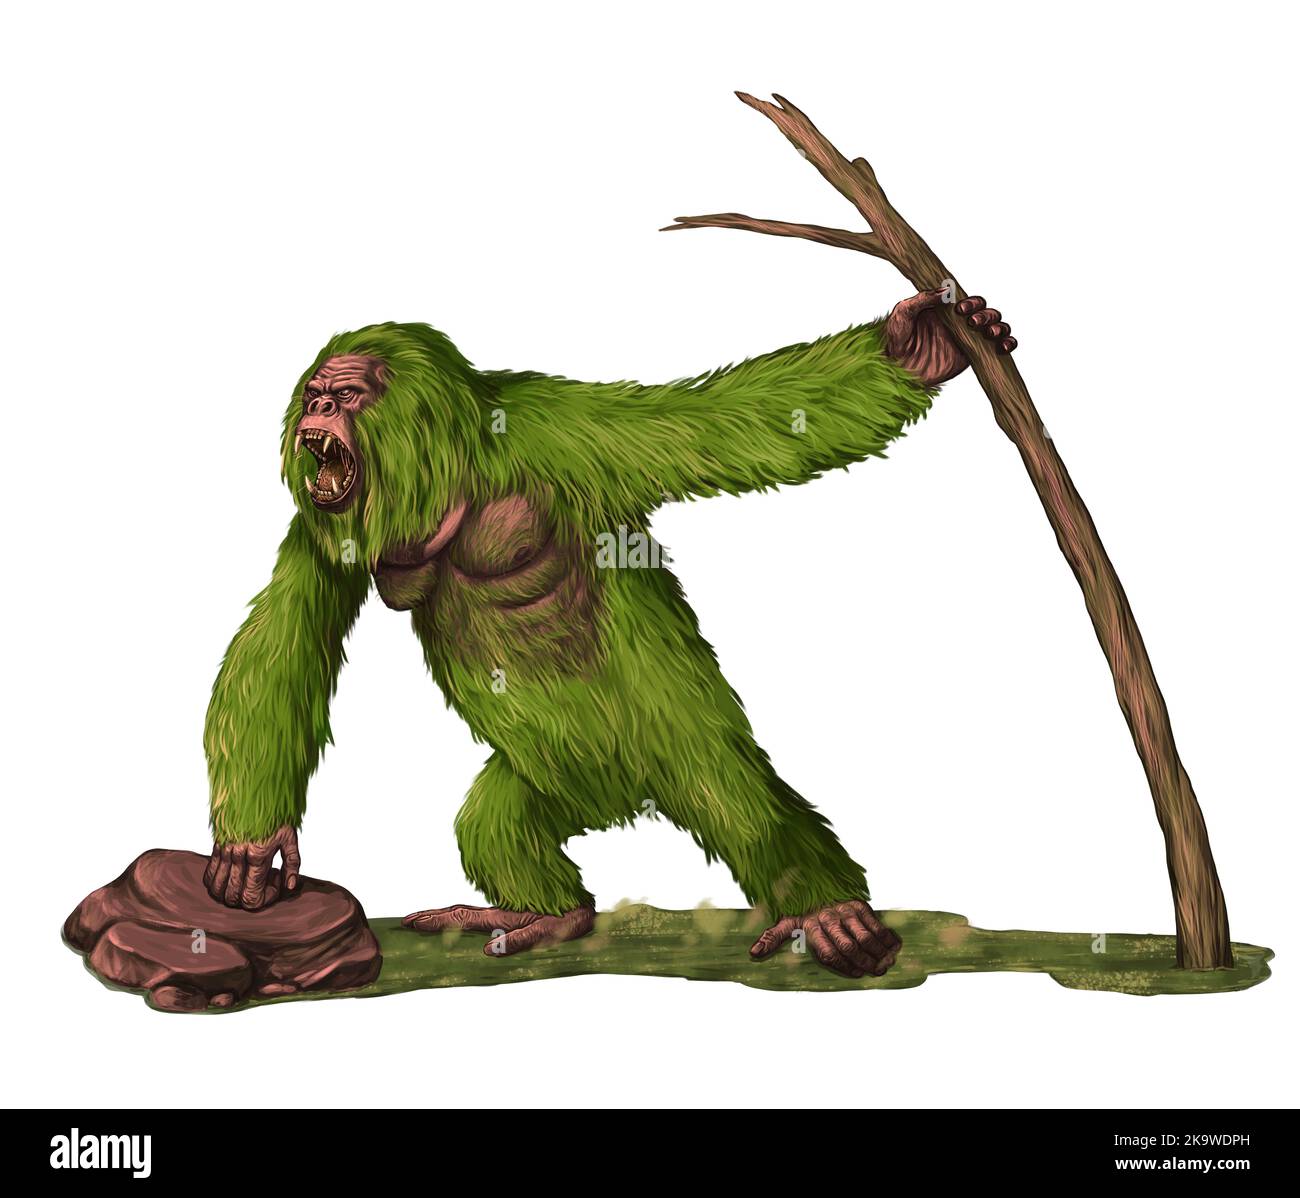 Ape-like creature - Yeti. Giant primate the Abominable Snowman. Digital illustration. Stock Photo